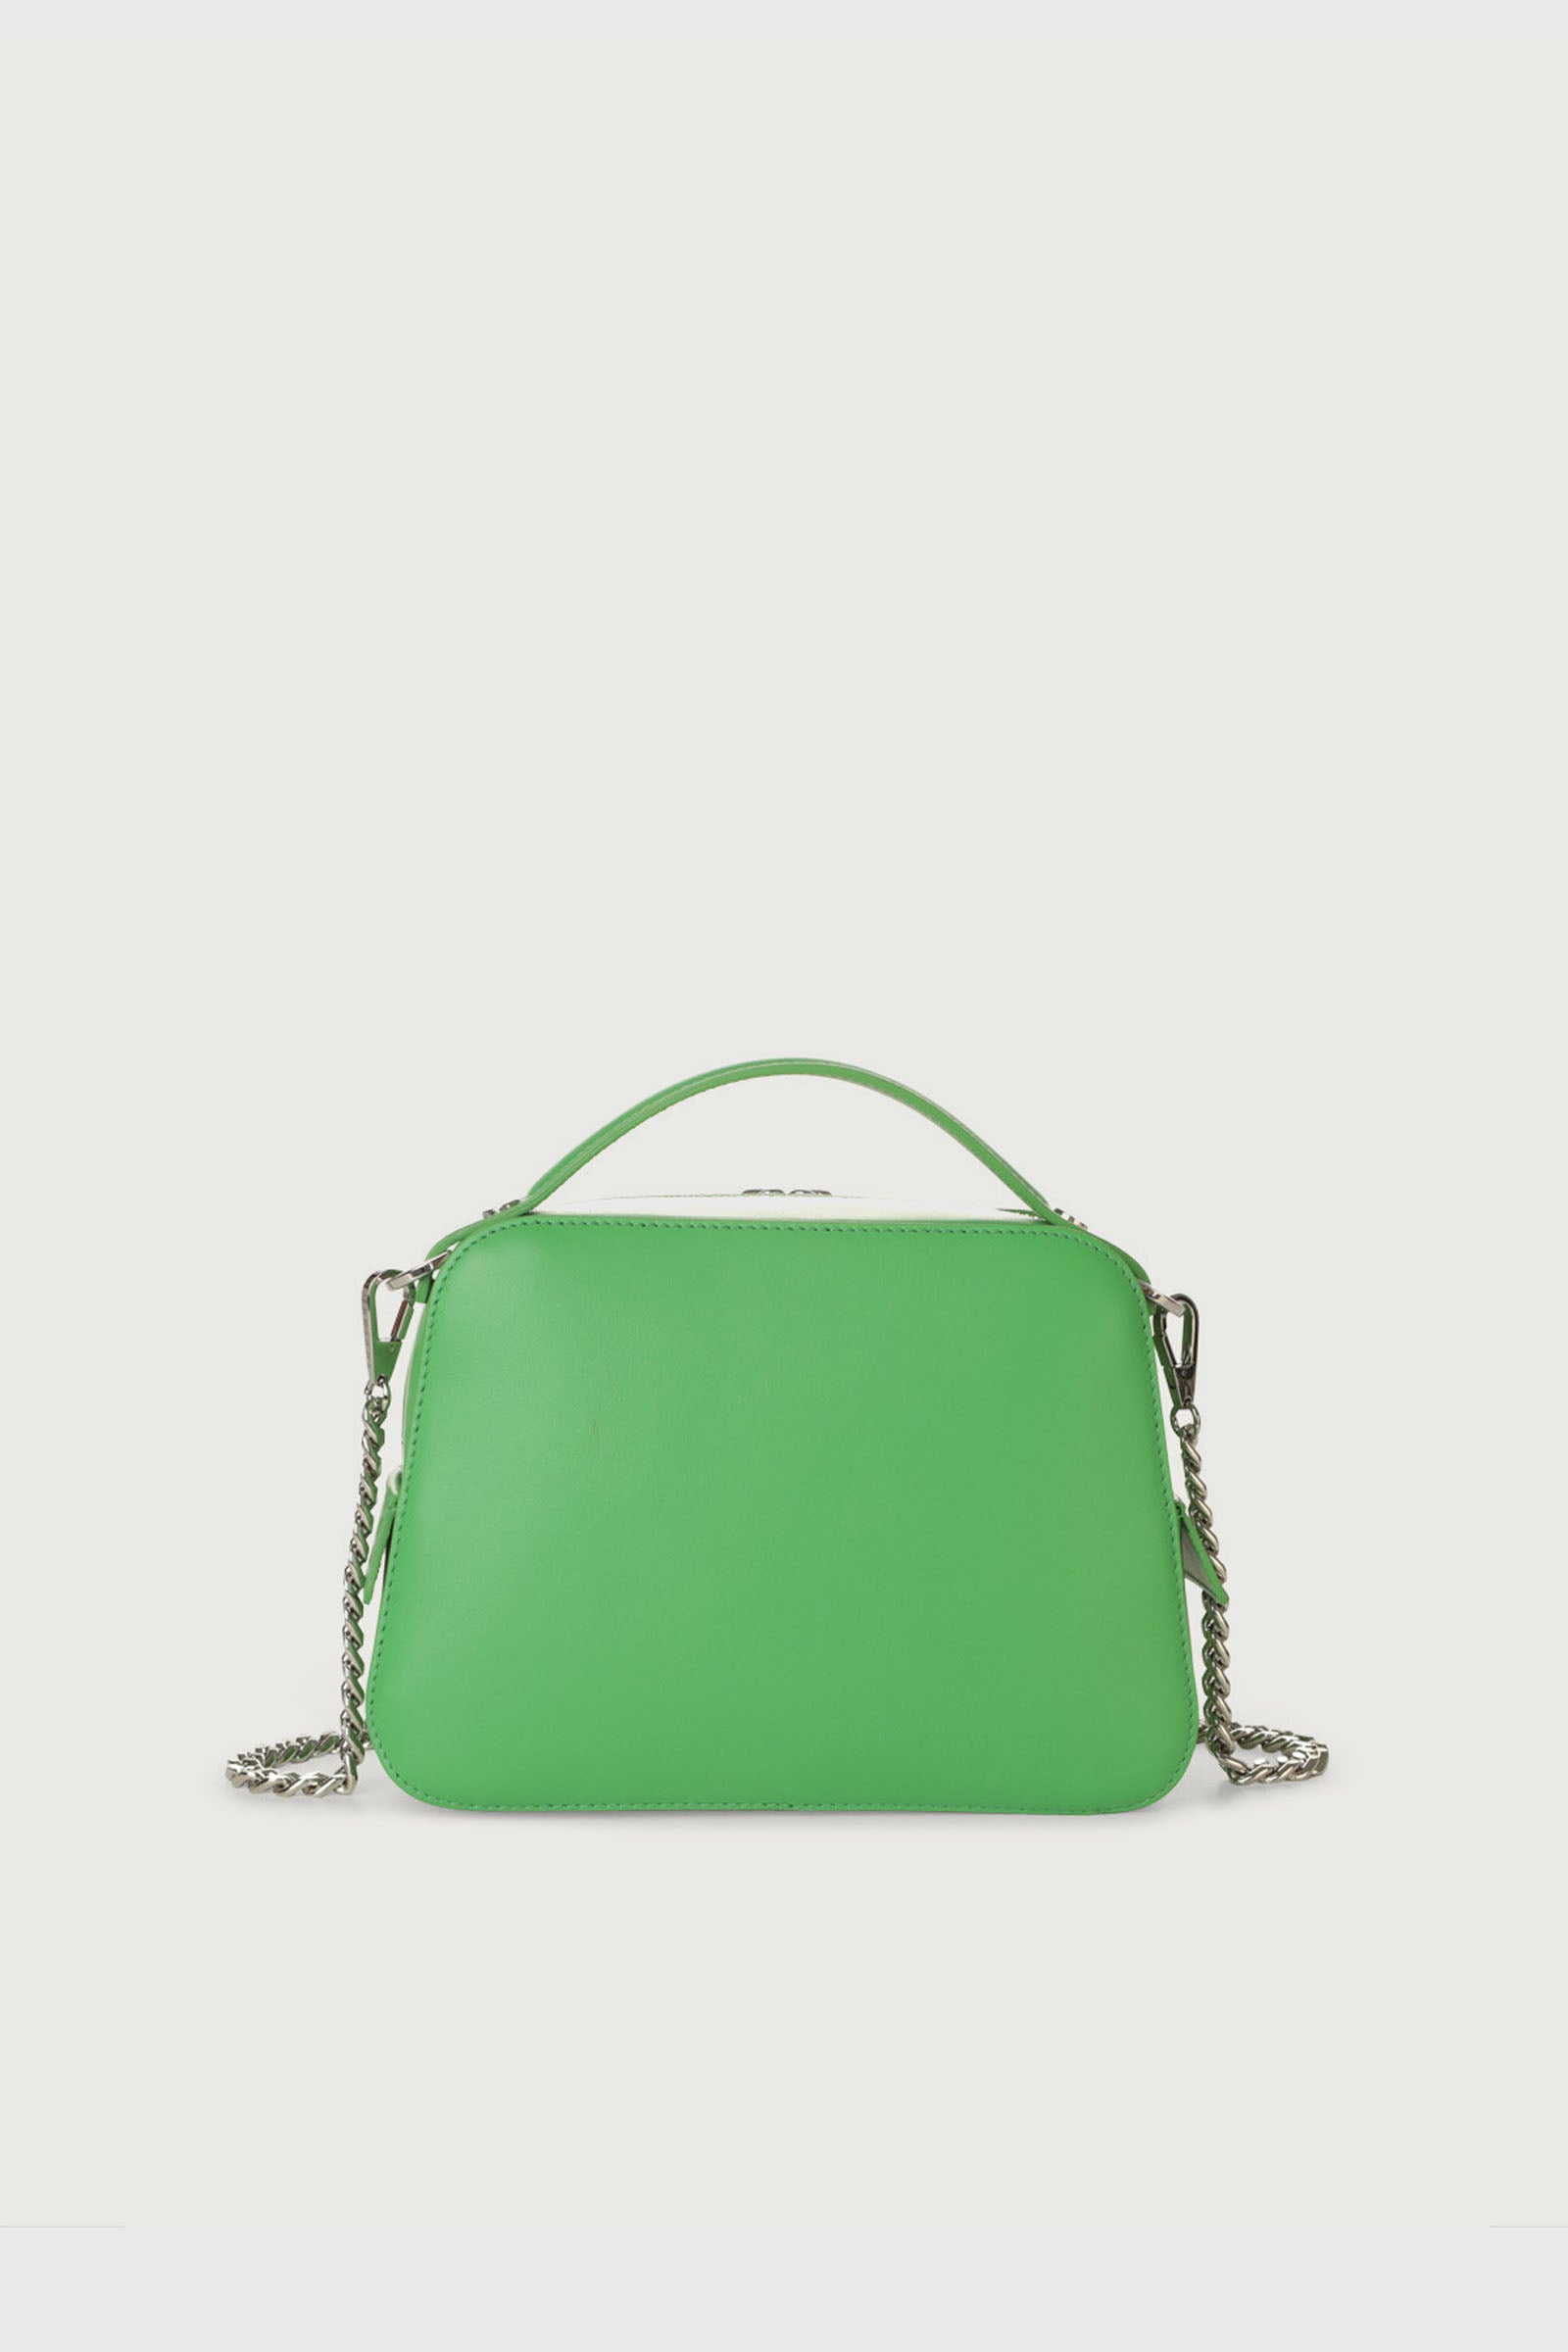 Orciani Mini Chéri Vanity Bag in Mint Green Leather - 3